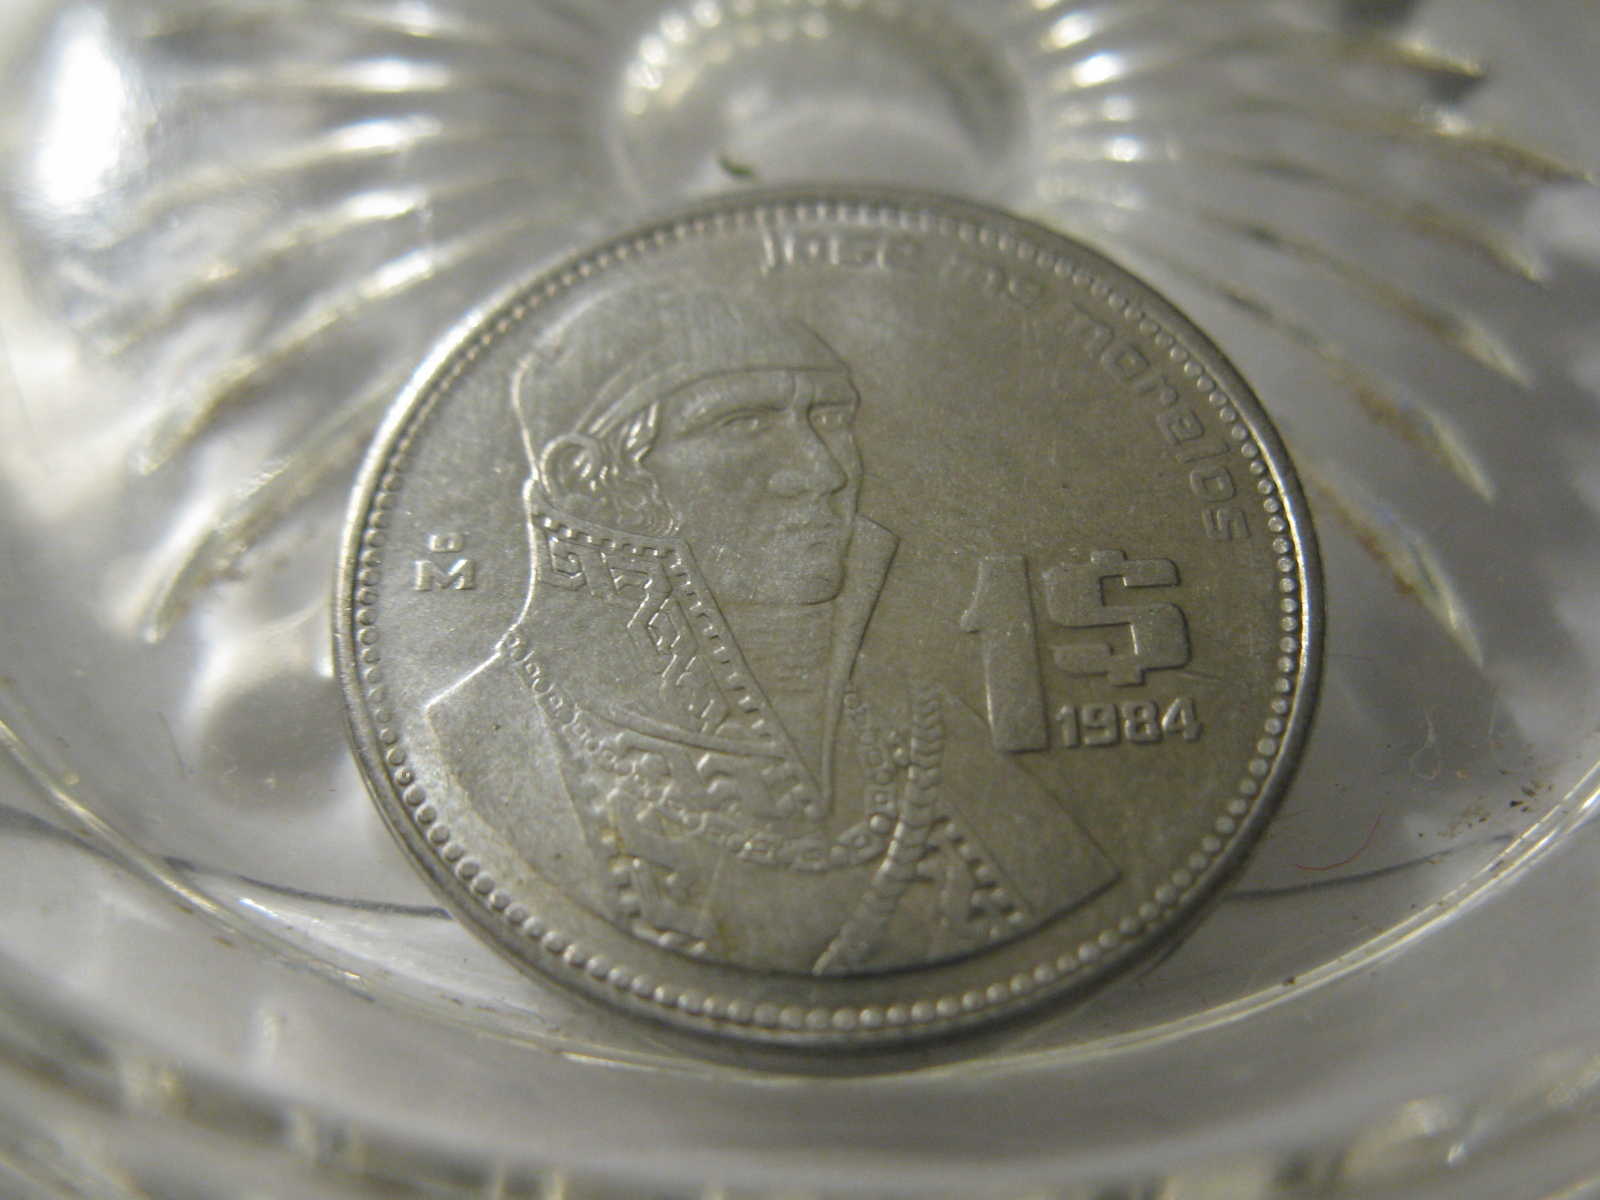 Primary image for (FC-51) 1984 Mexico: 1 Peso - w/ RA signature on lapel collar